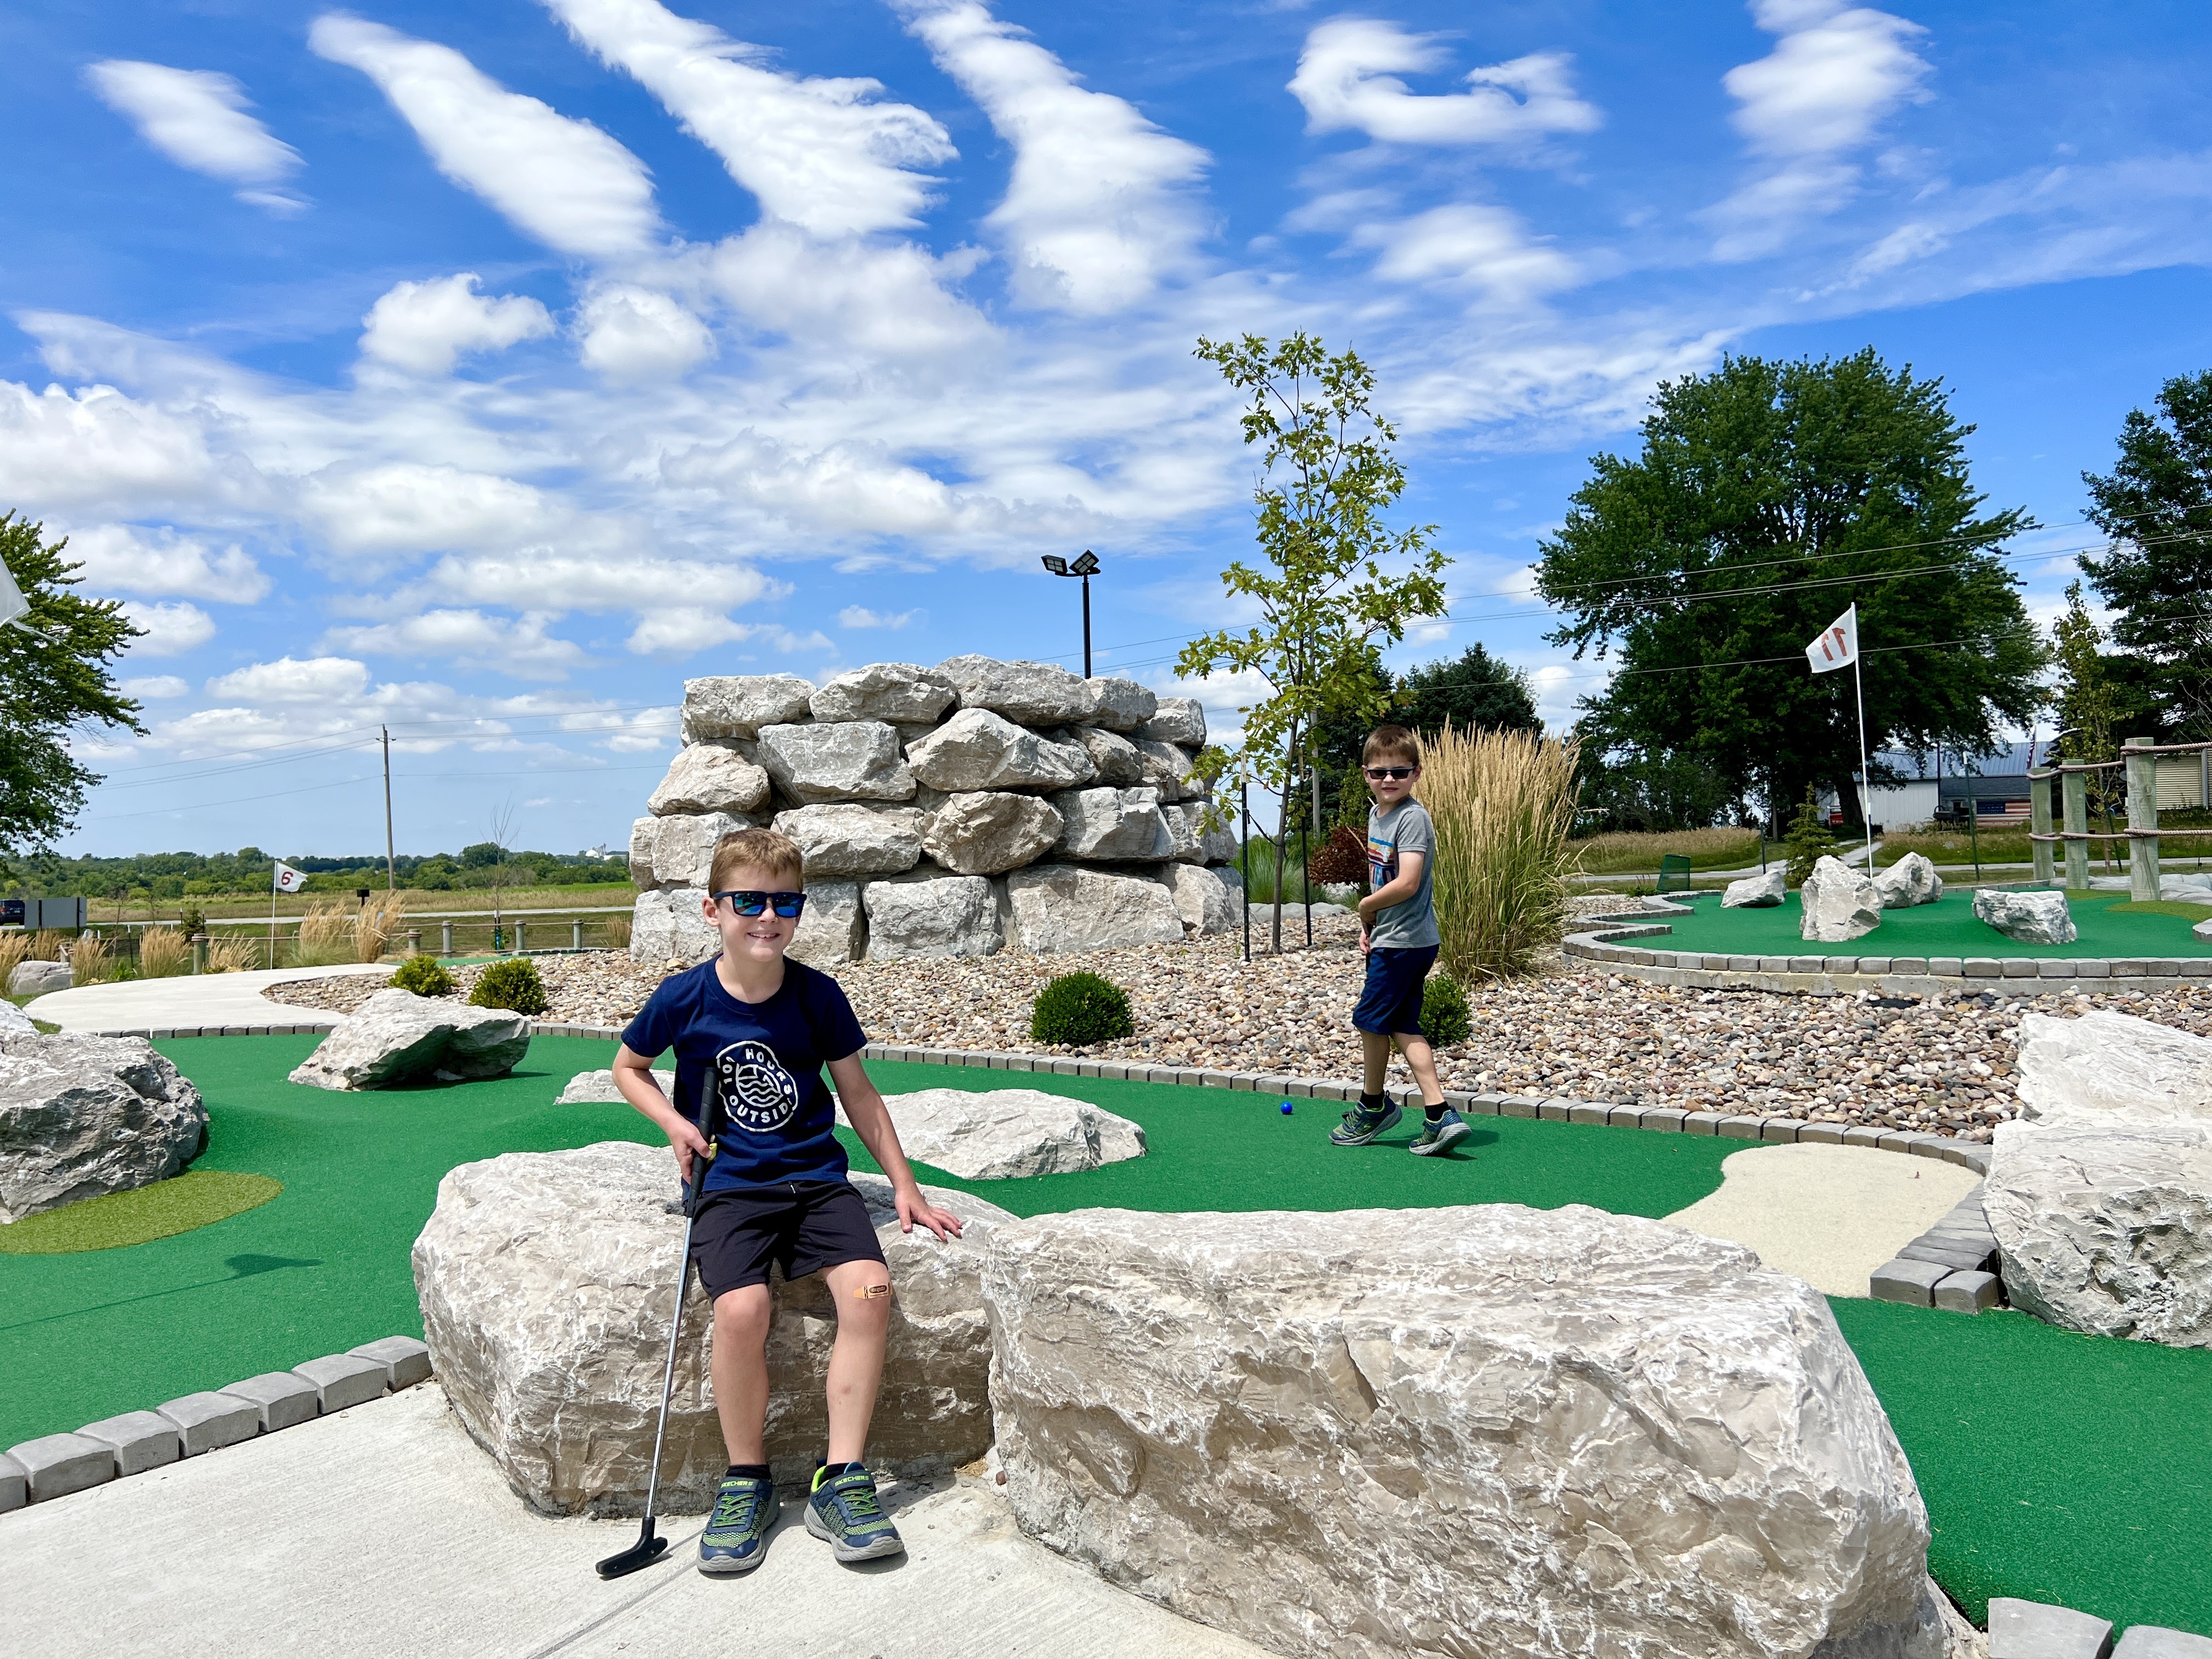 Mini Golf at Jester Park